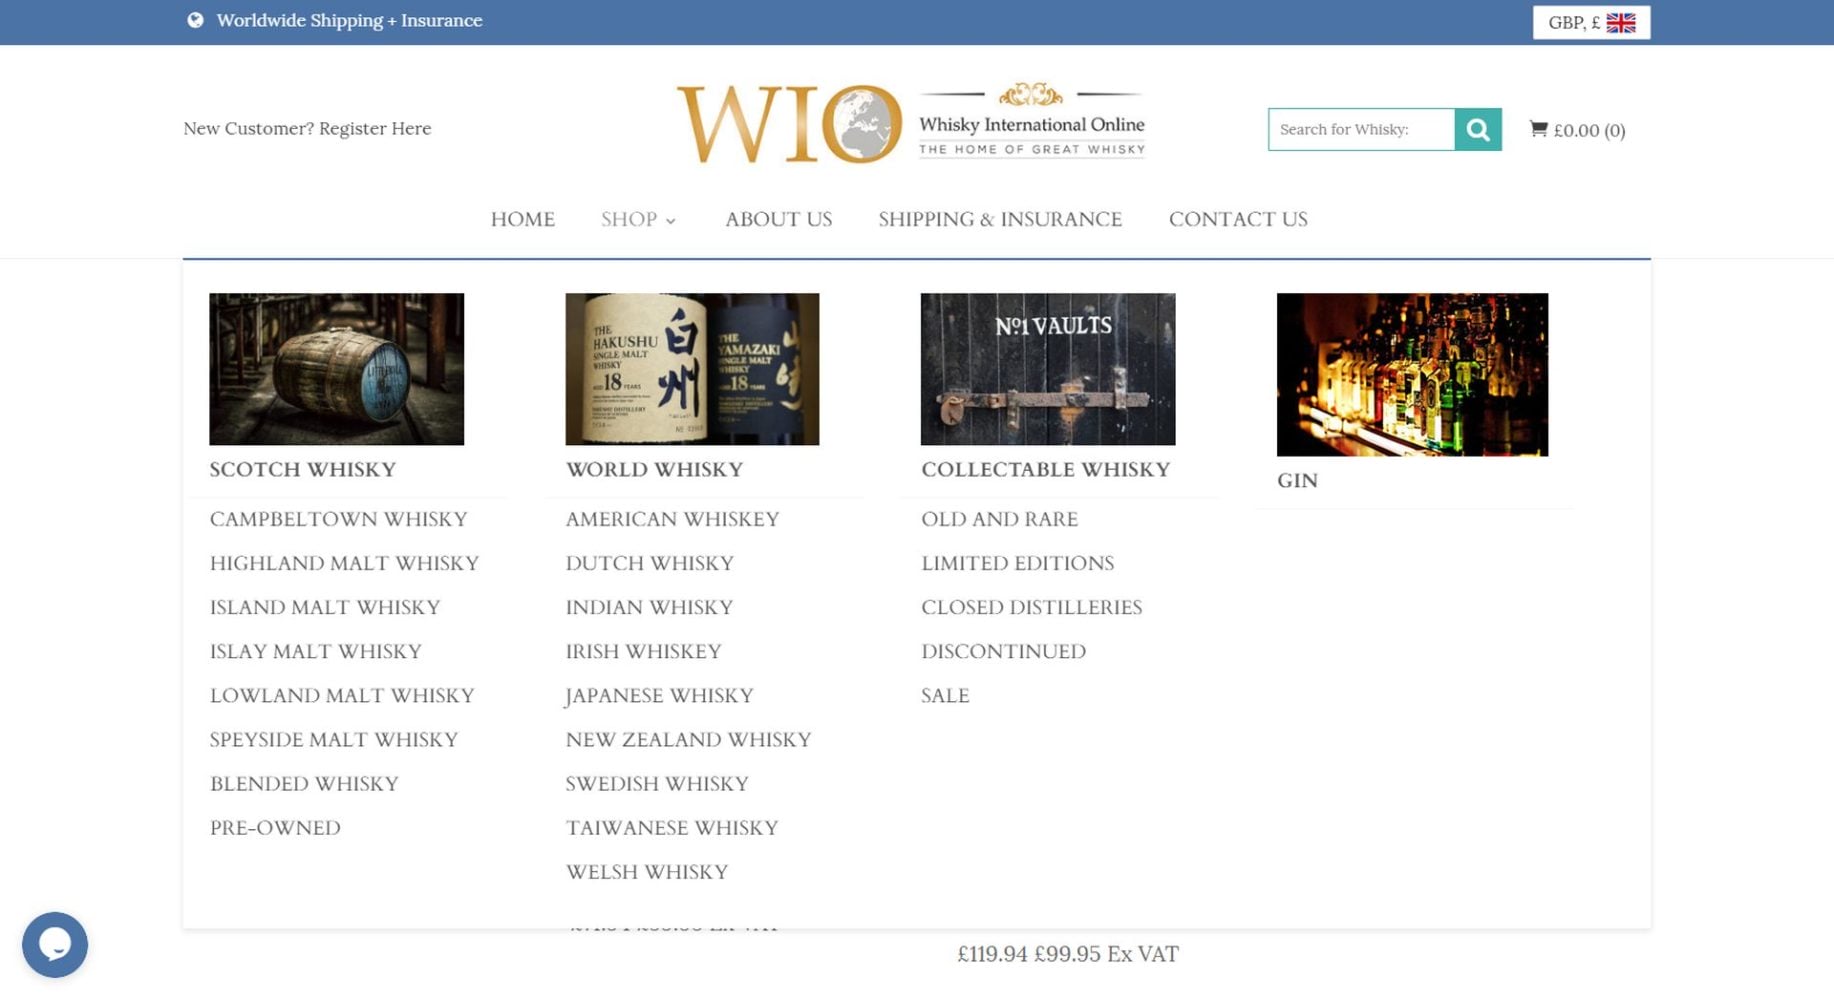 Whisky International Online Categories